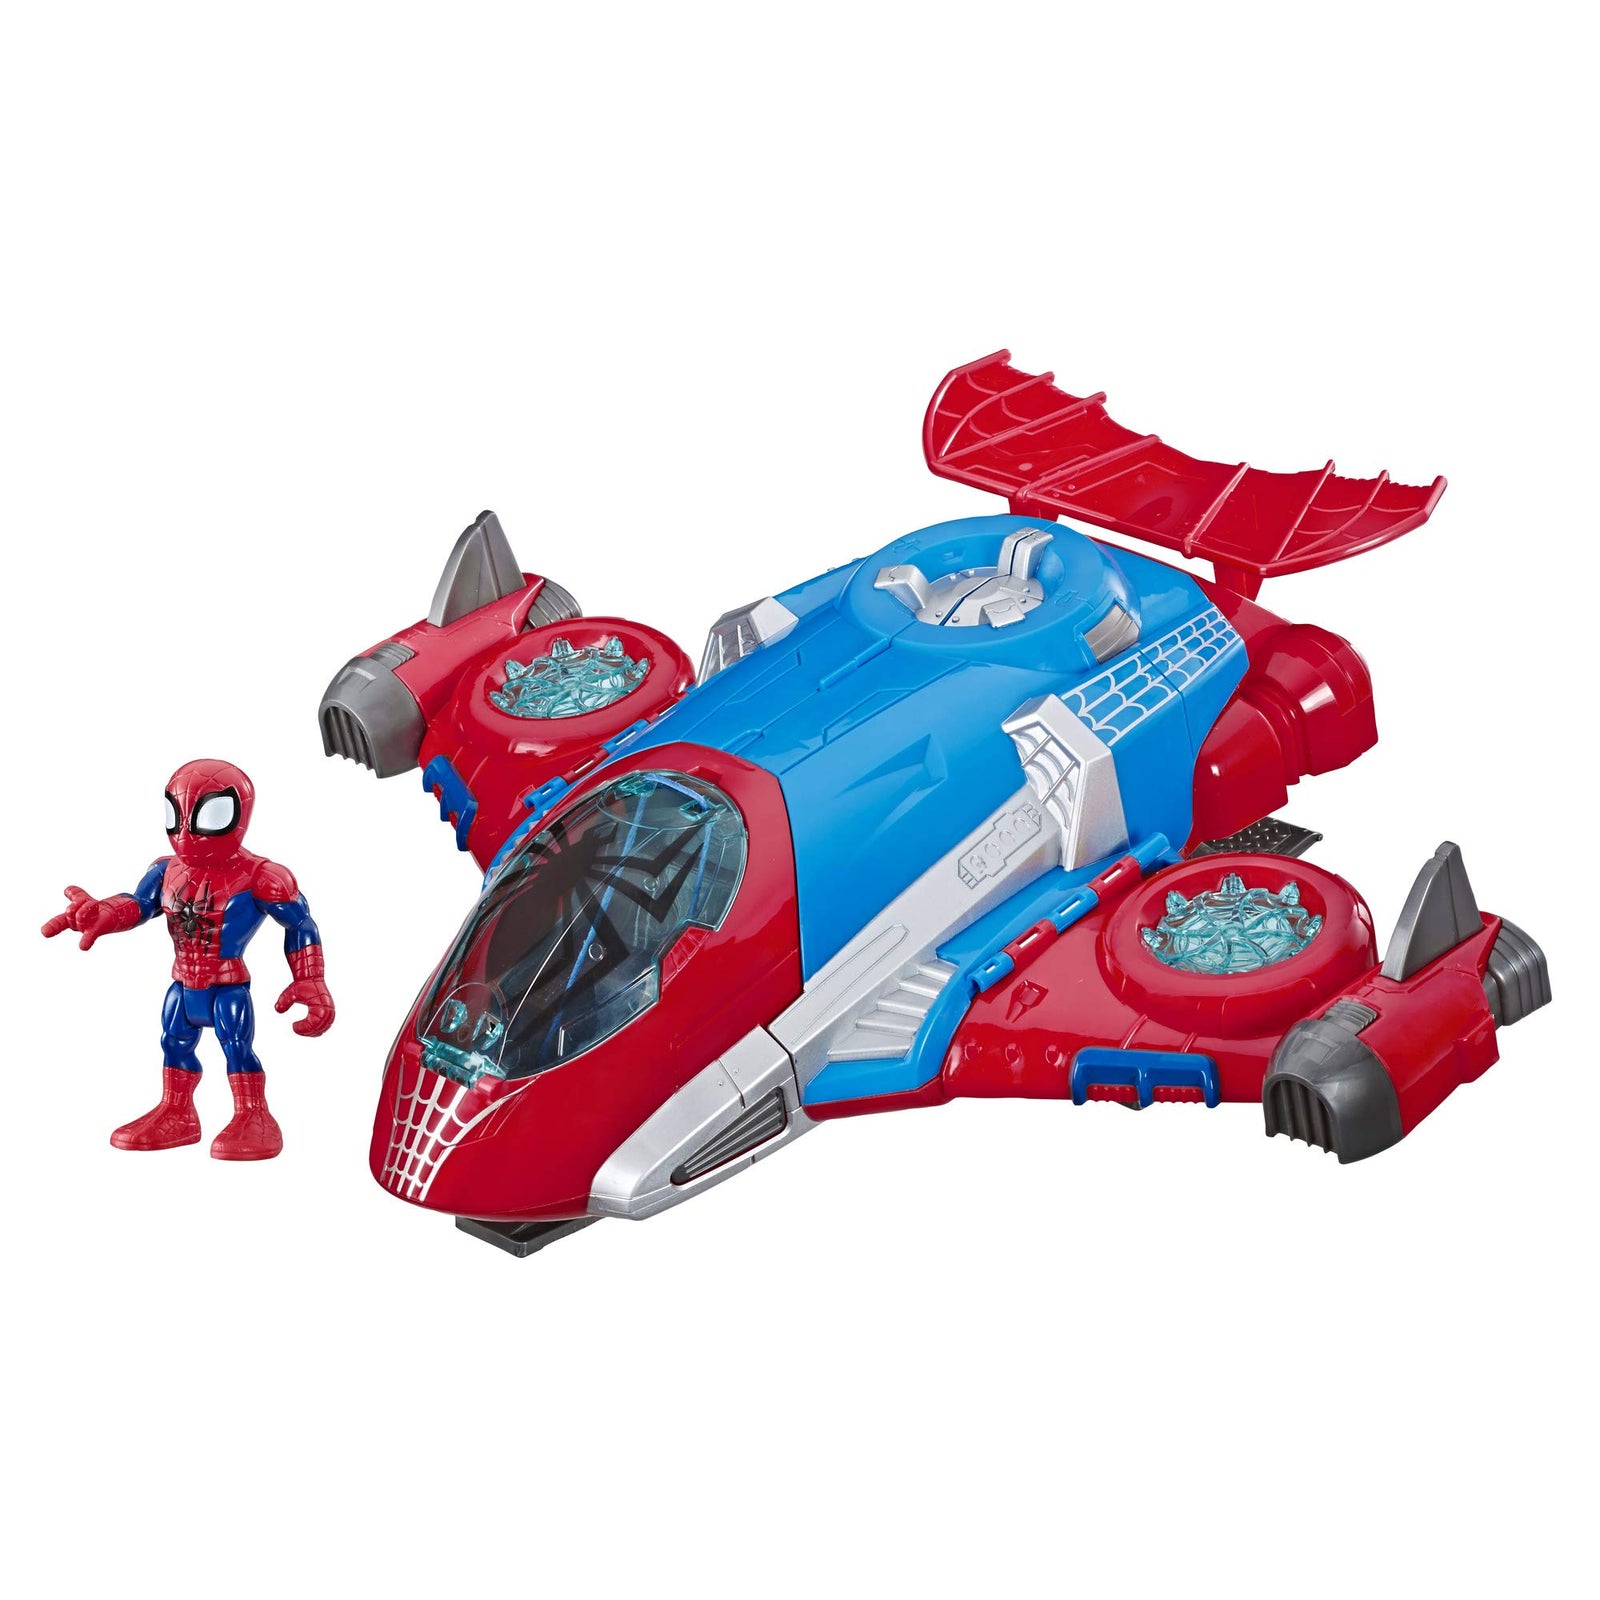 Super Hero Adventures Playskool Heroes Marvel Spider-Man Jetquarters